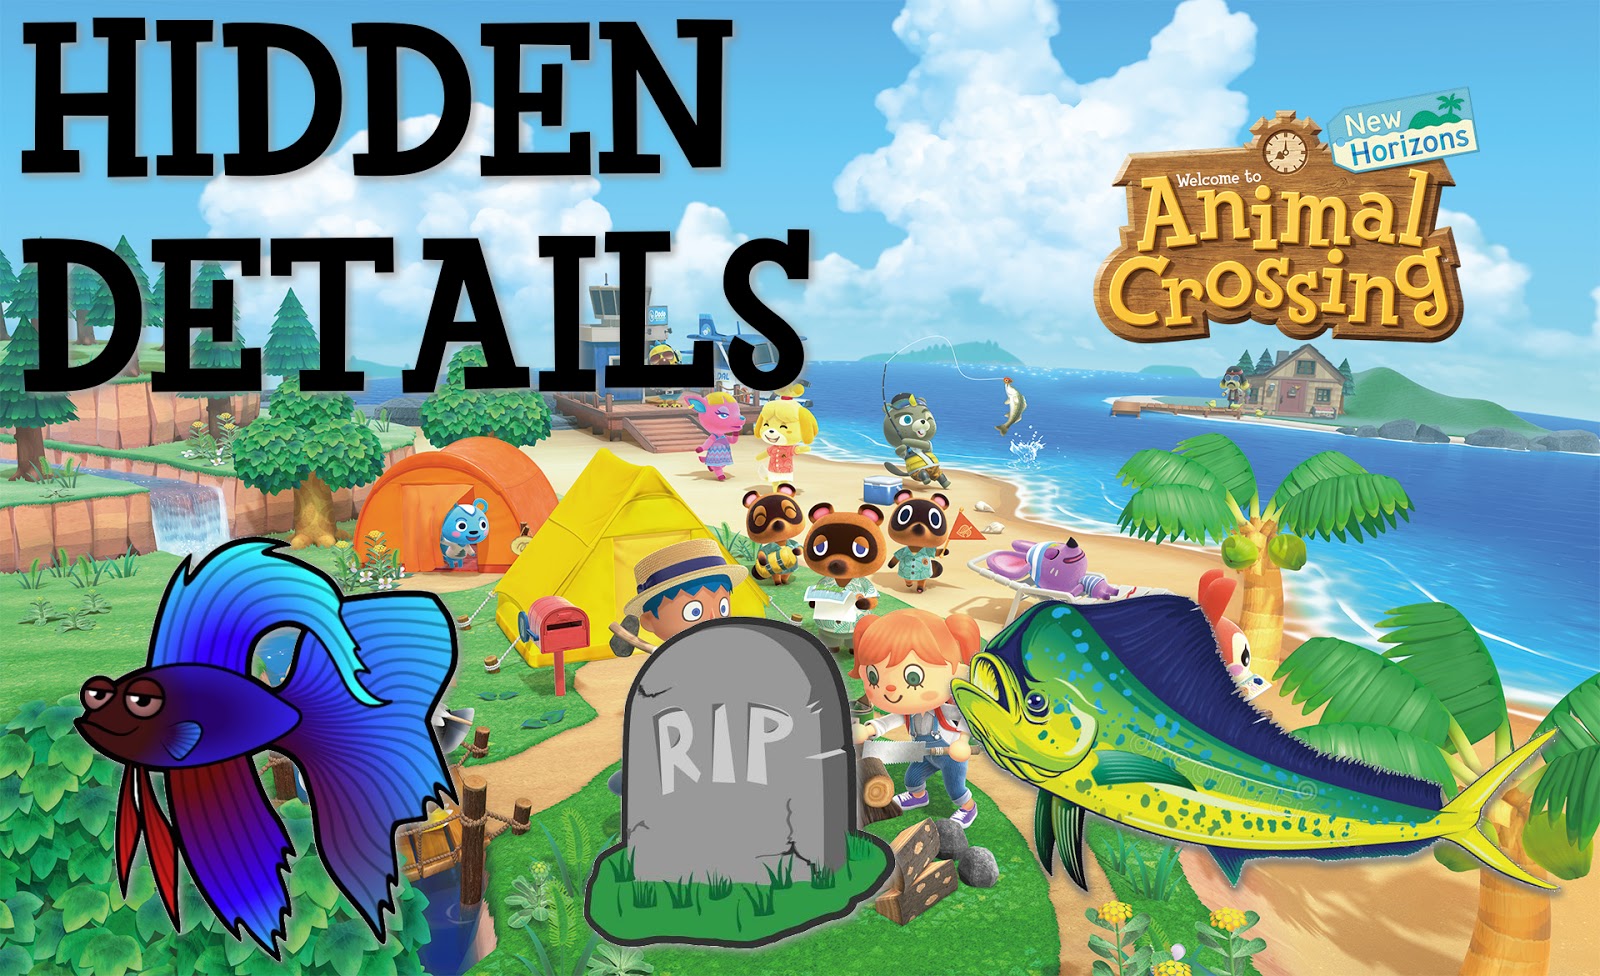 Animal Crossing: New Horizons Direct - Hidden Details